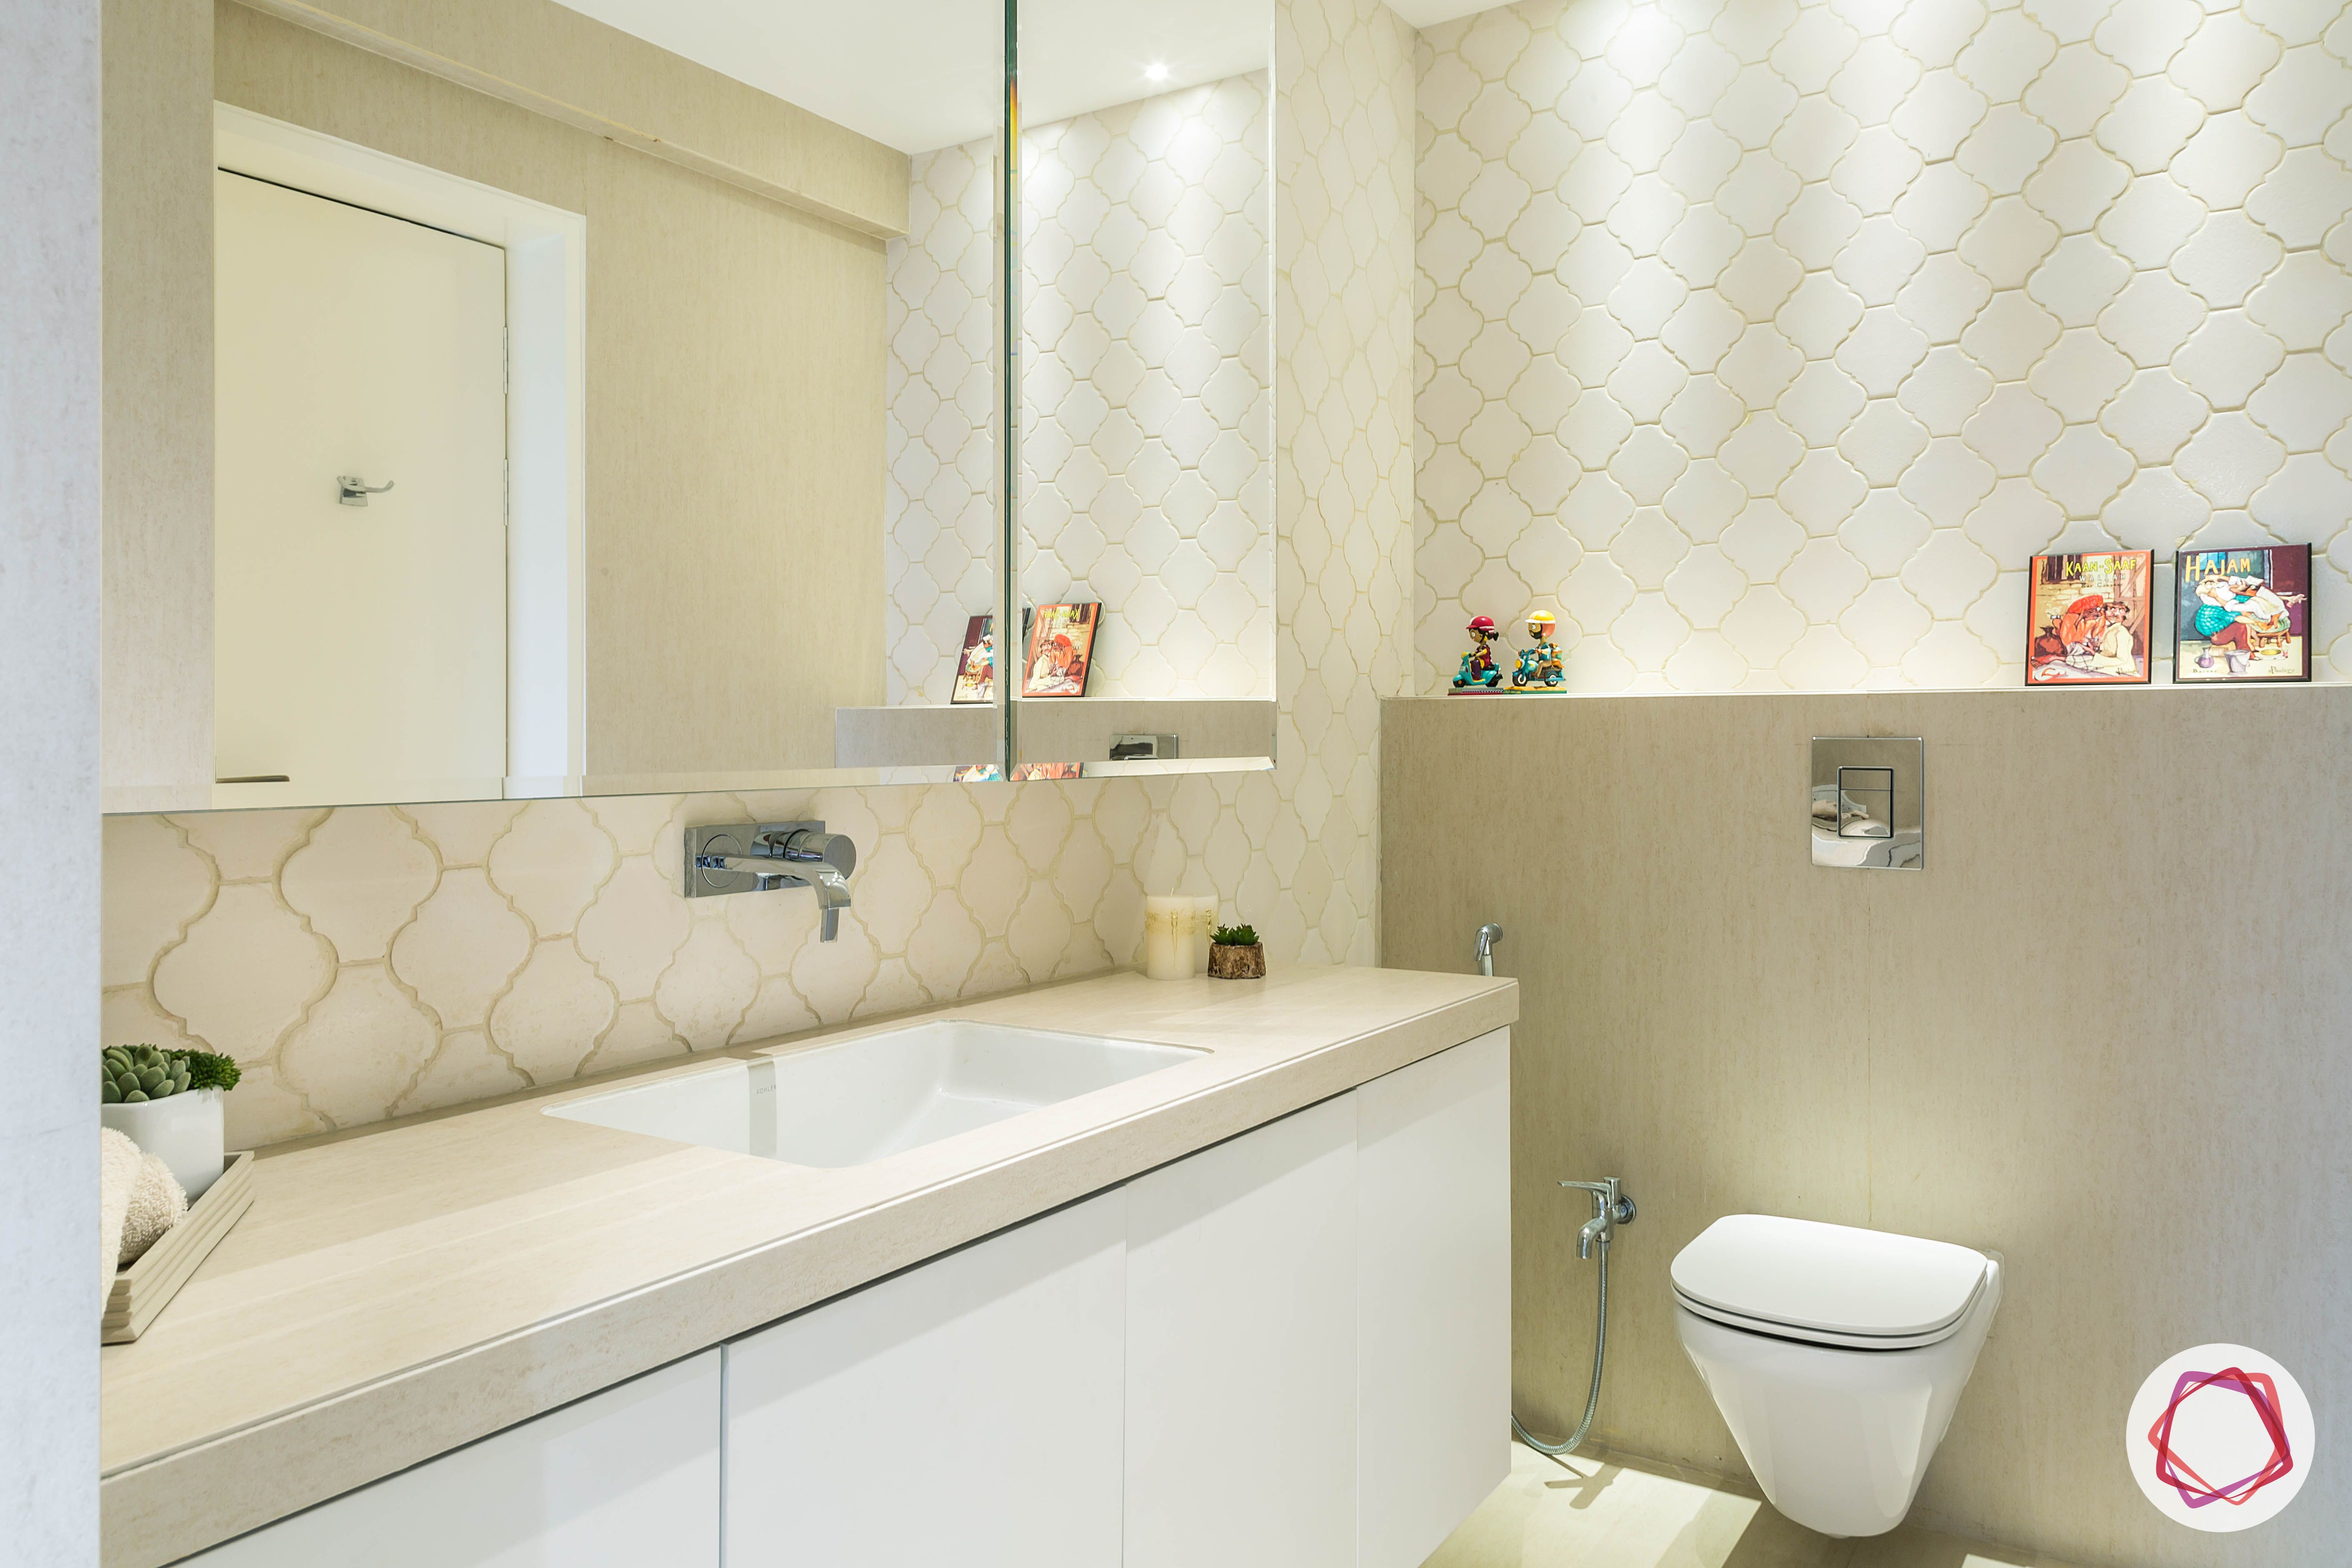 4bhk house plan-bathroom designs-bathroom tiles-moroccan tiles-vanity unit